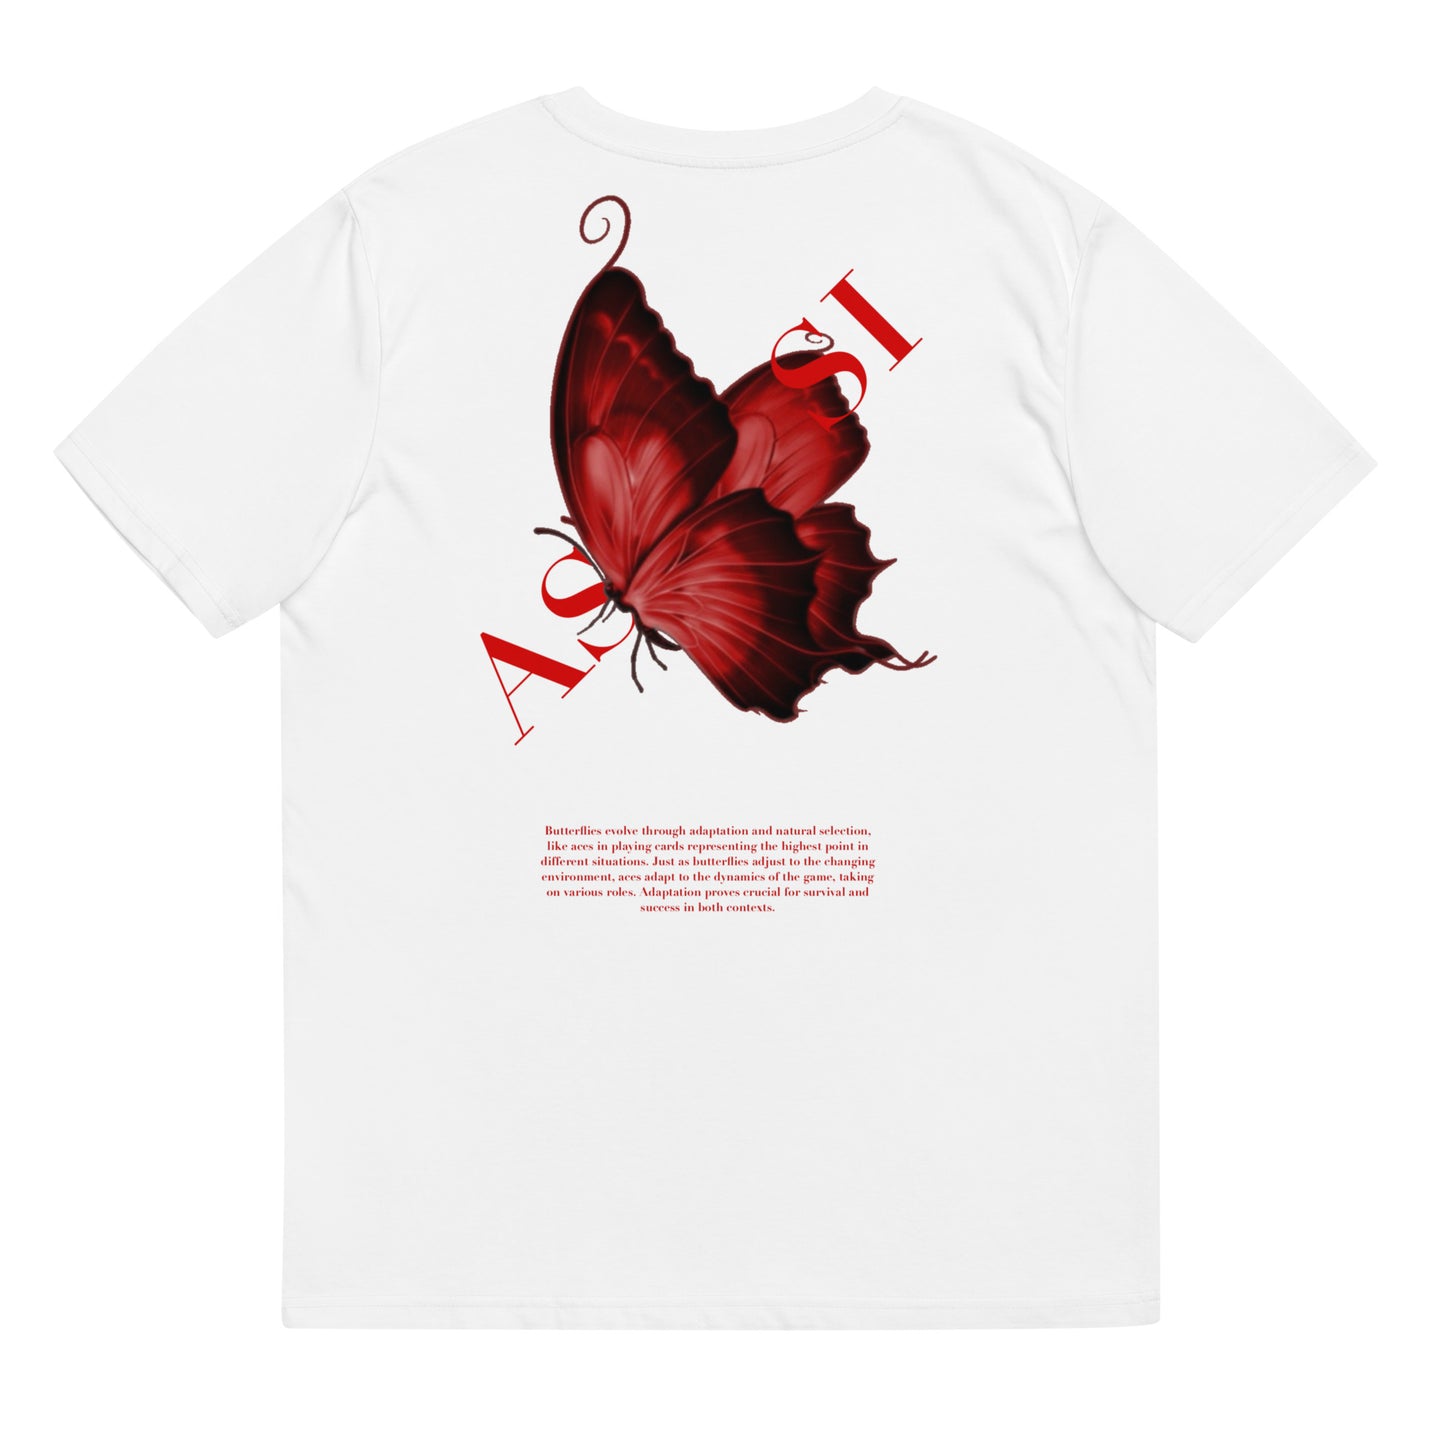 T-shirt unisexe papillon Assi